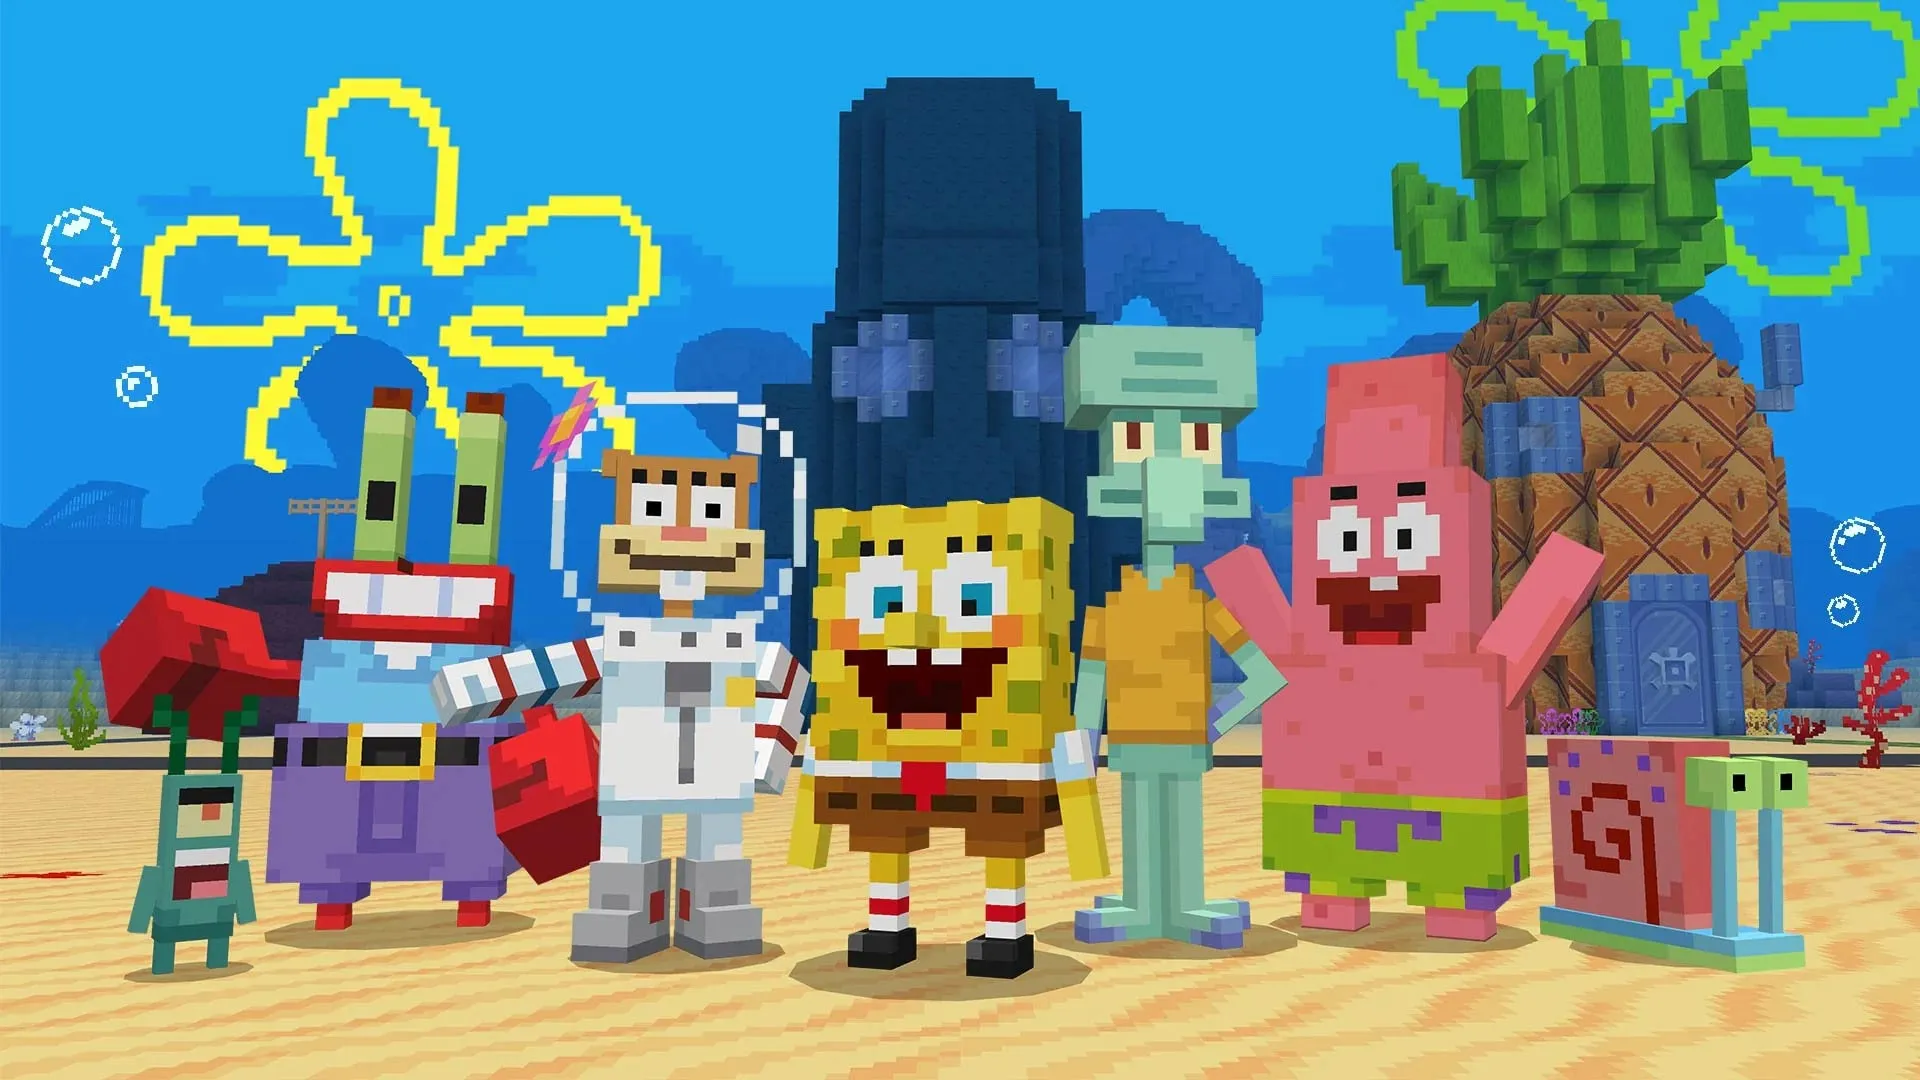 Minecraft SpongeBob SquarePants DLC lets you visit Bikini Bottom